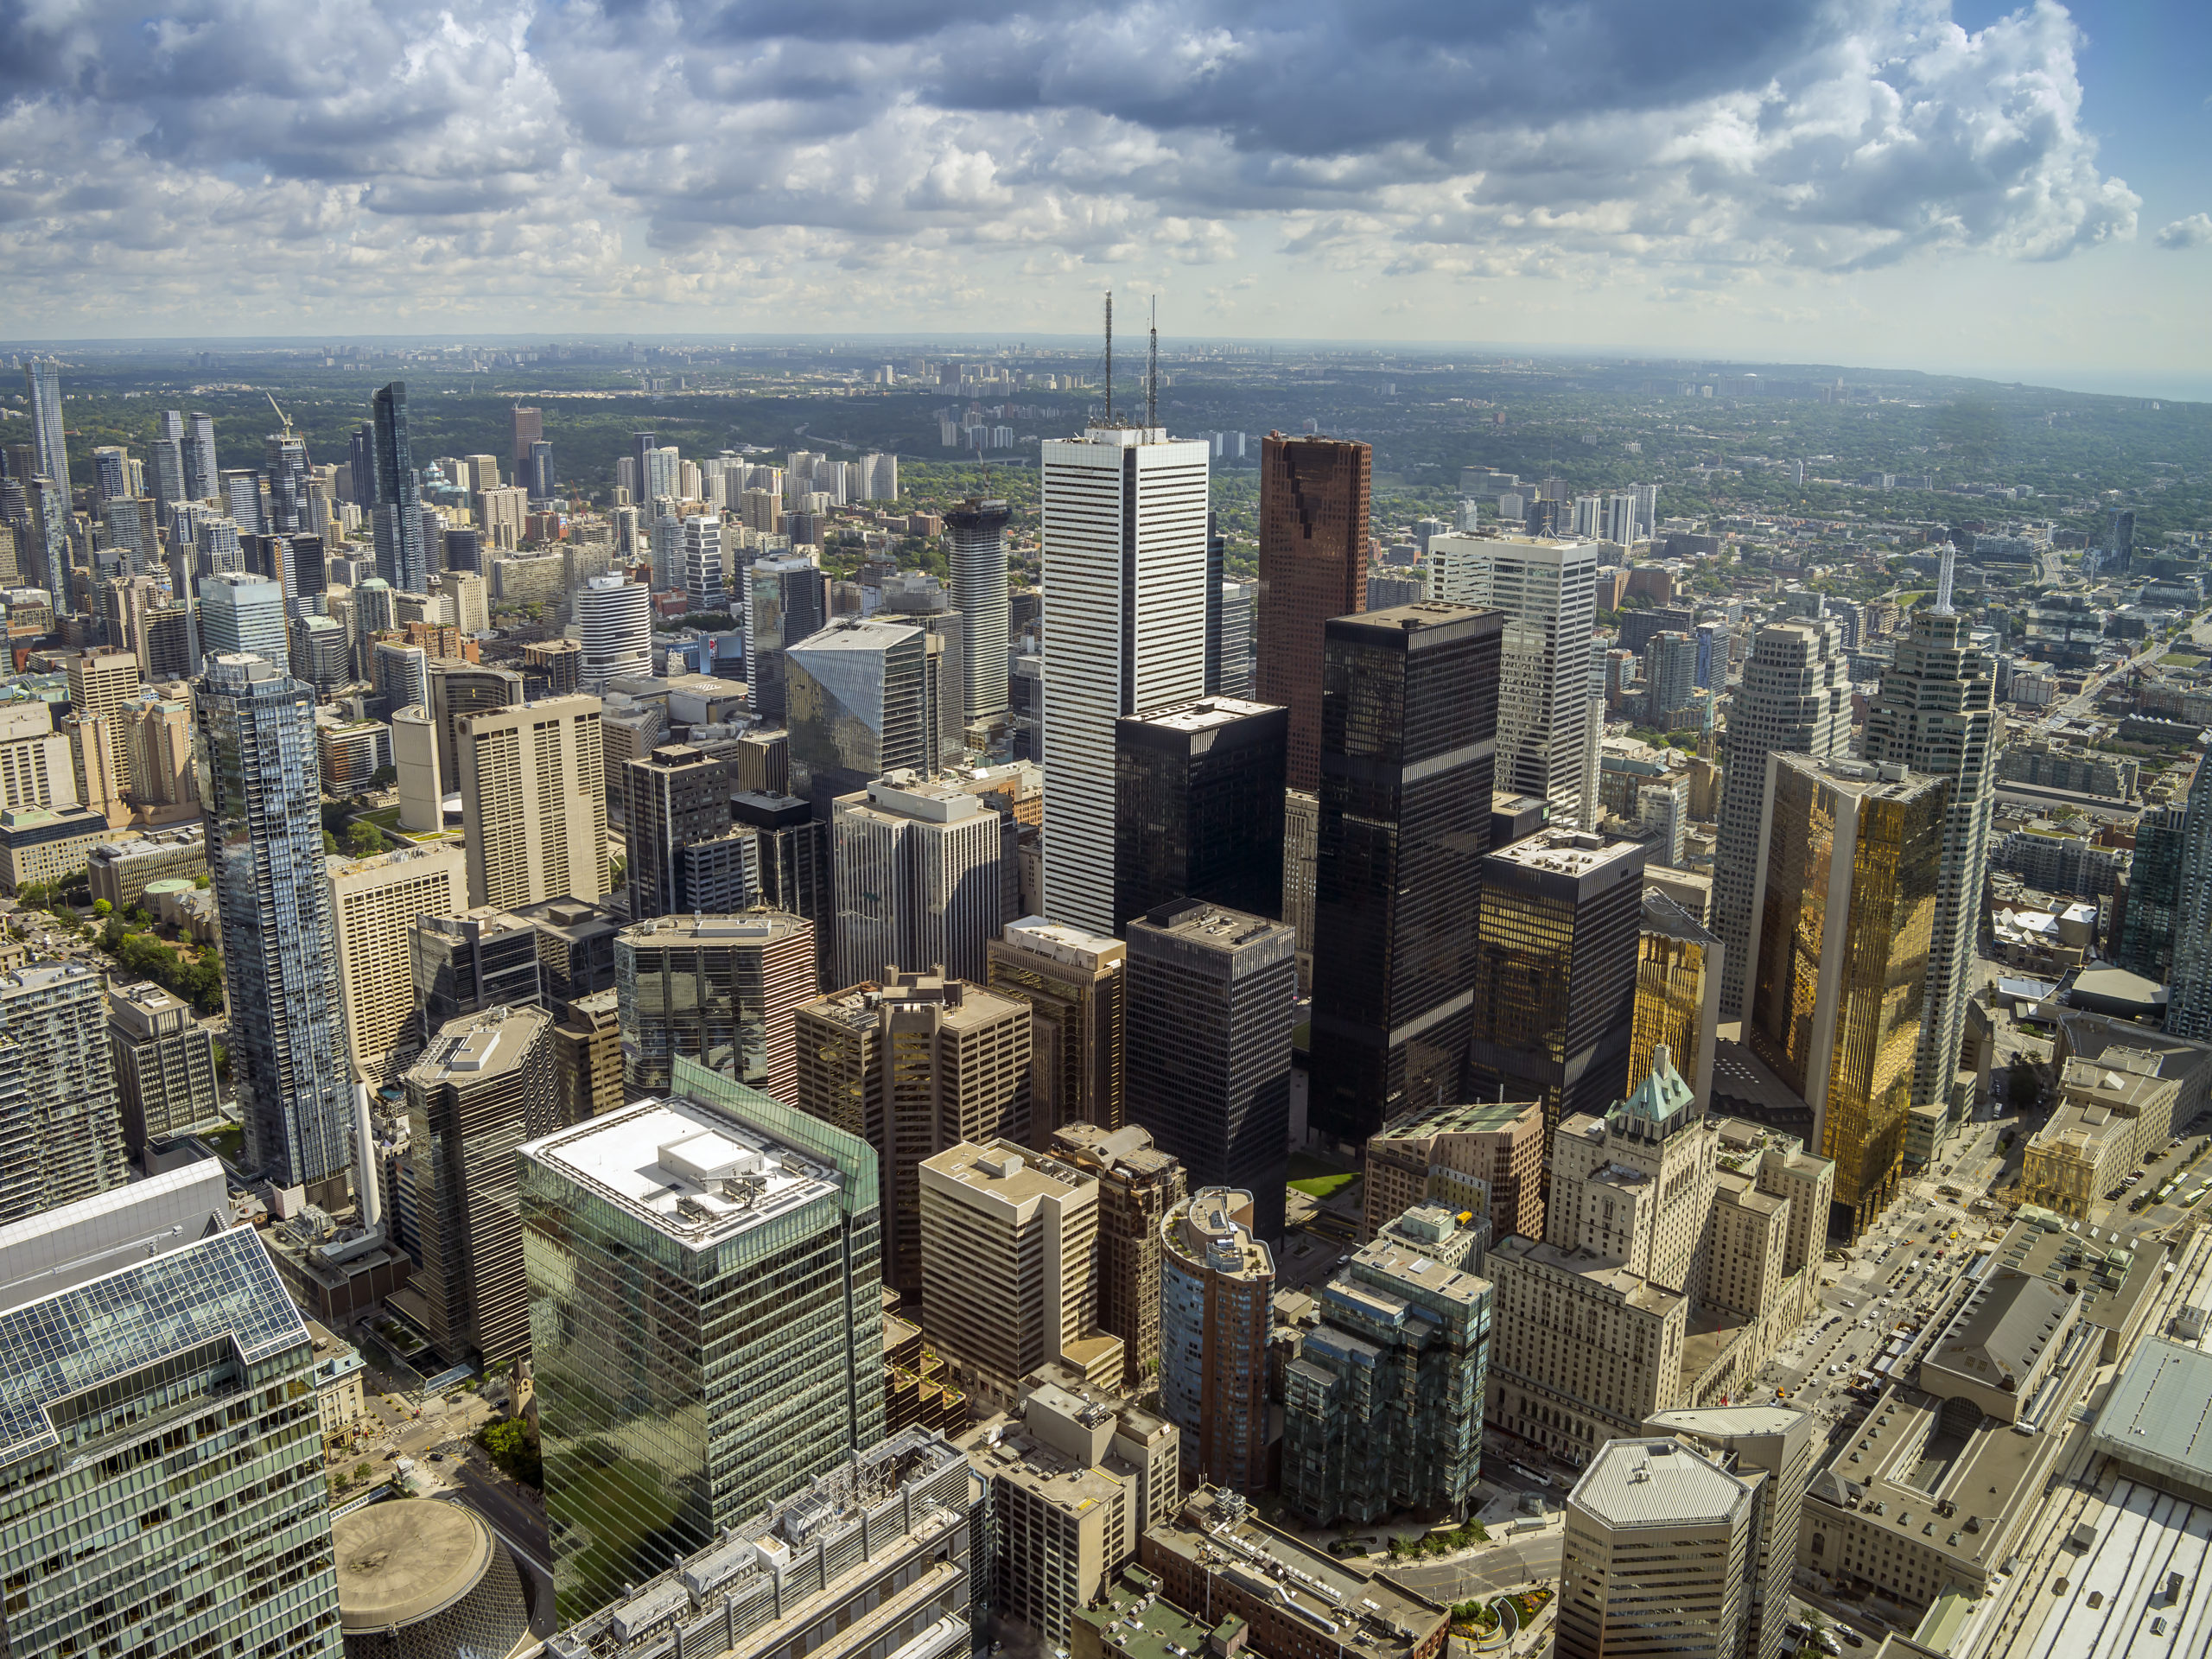 Operators of short-term rentals in Toronto must register prior to December 31, 2020